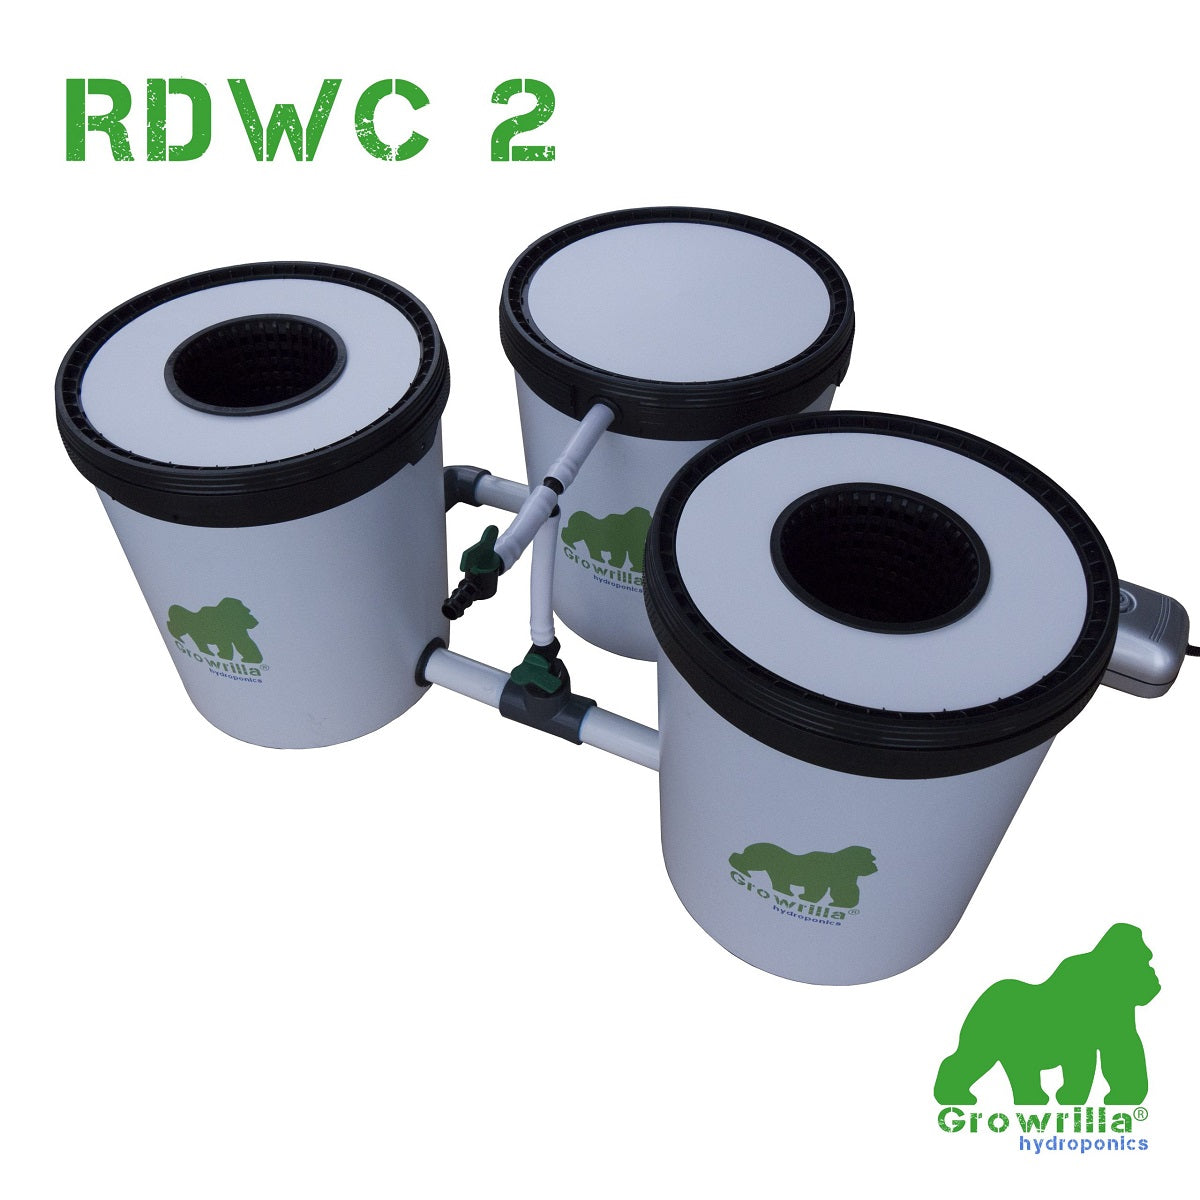 Growrilla 2.0 RDWC 2